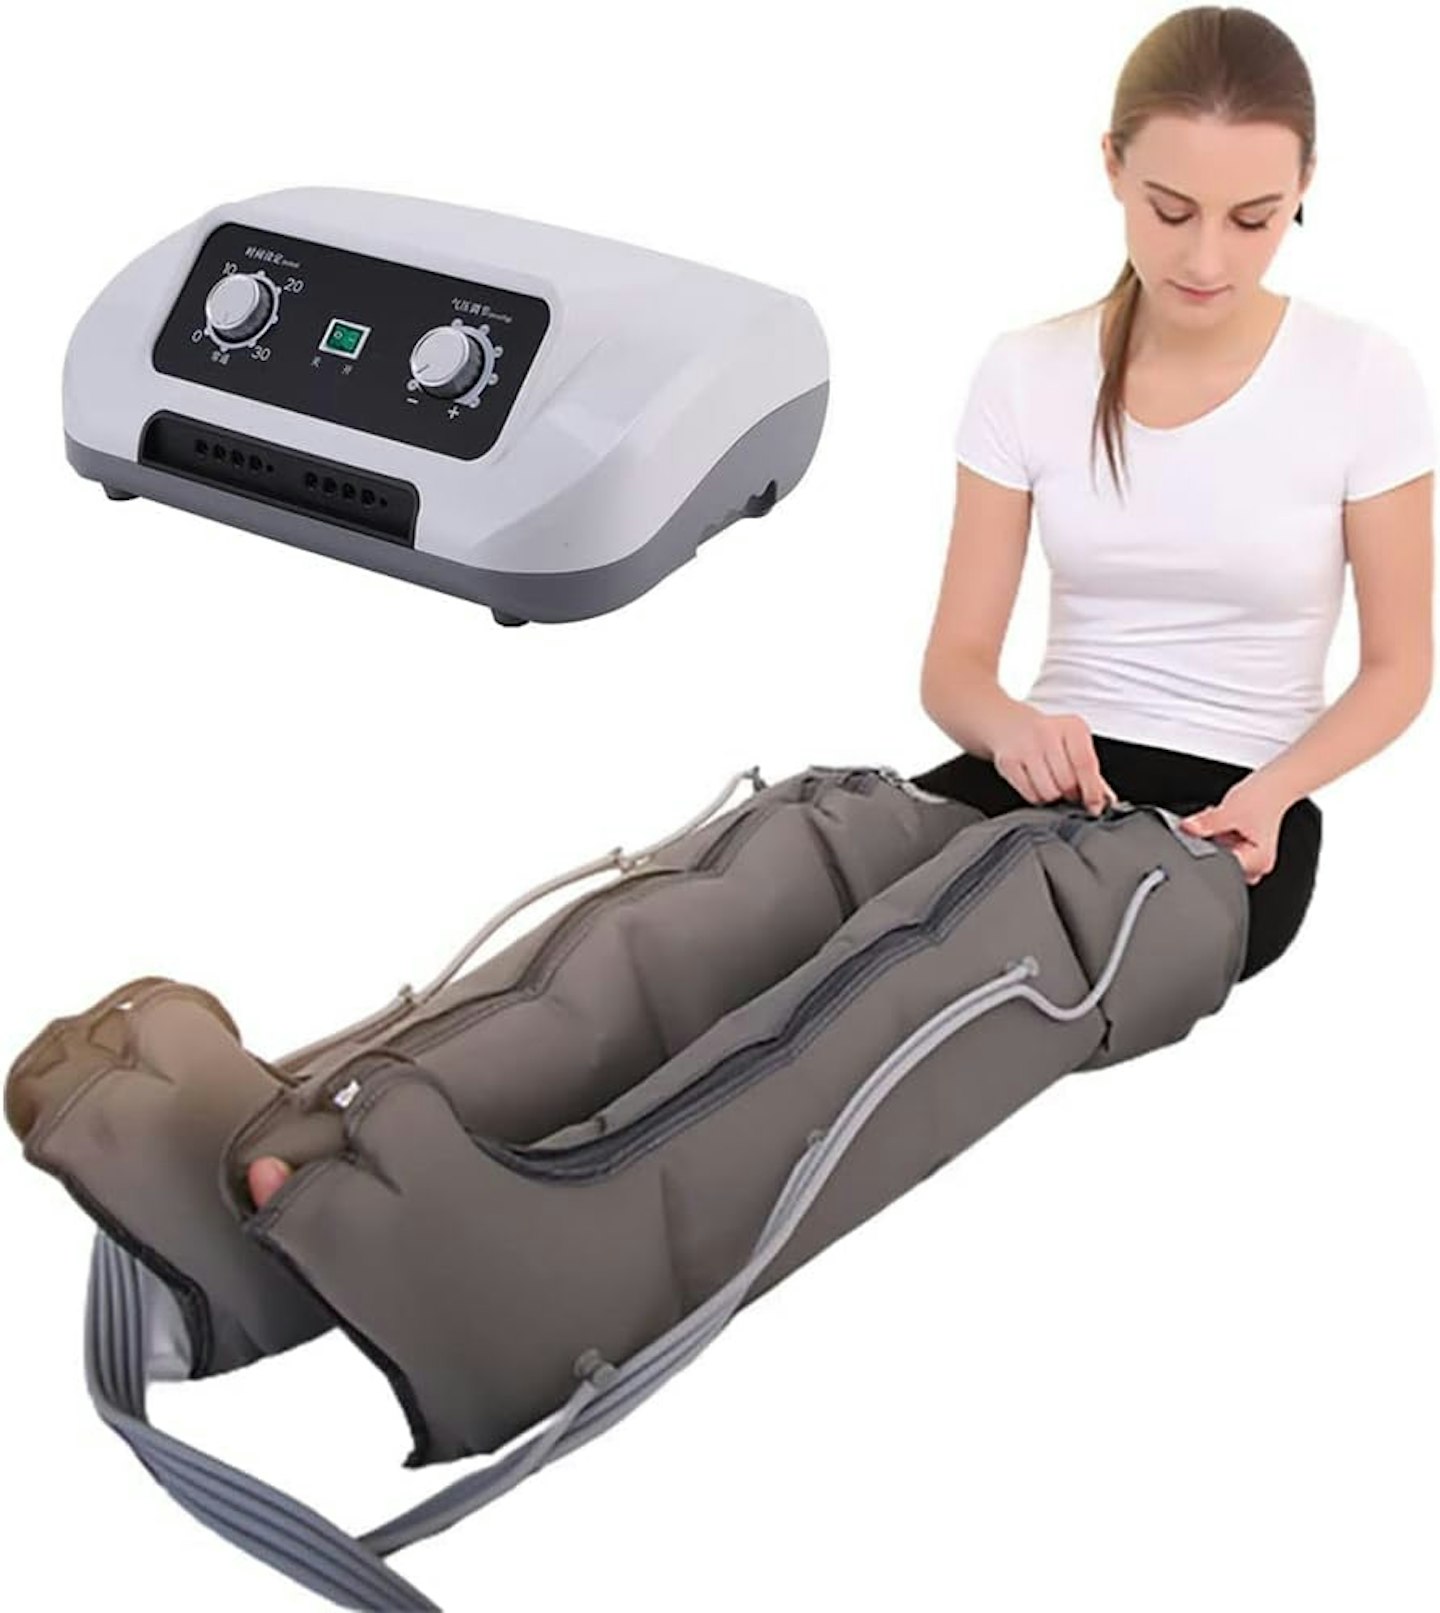 USMEI Electric Air Pressure Leg Massager